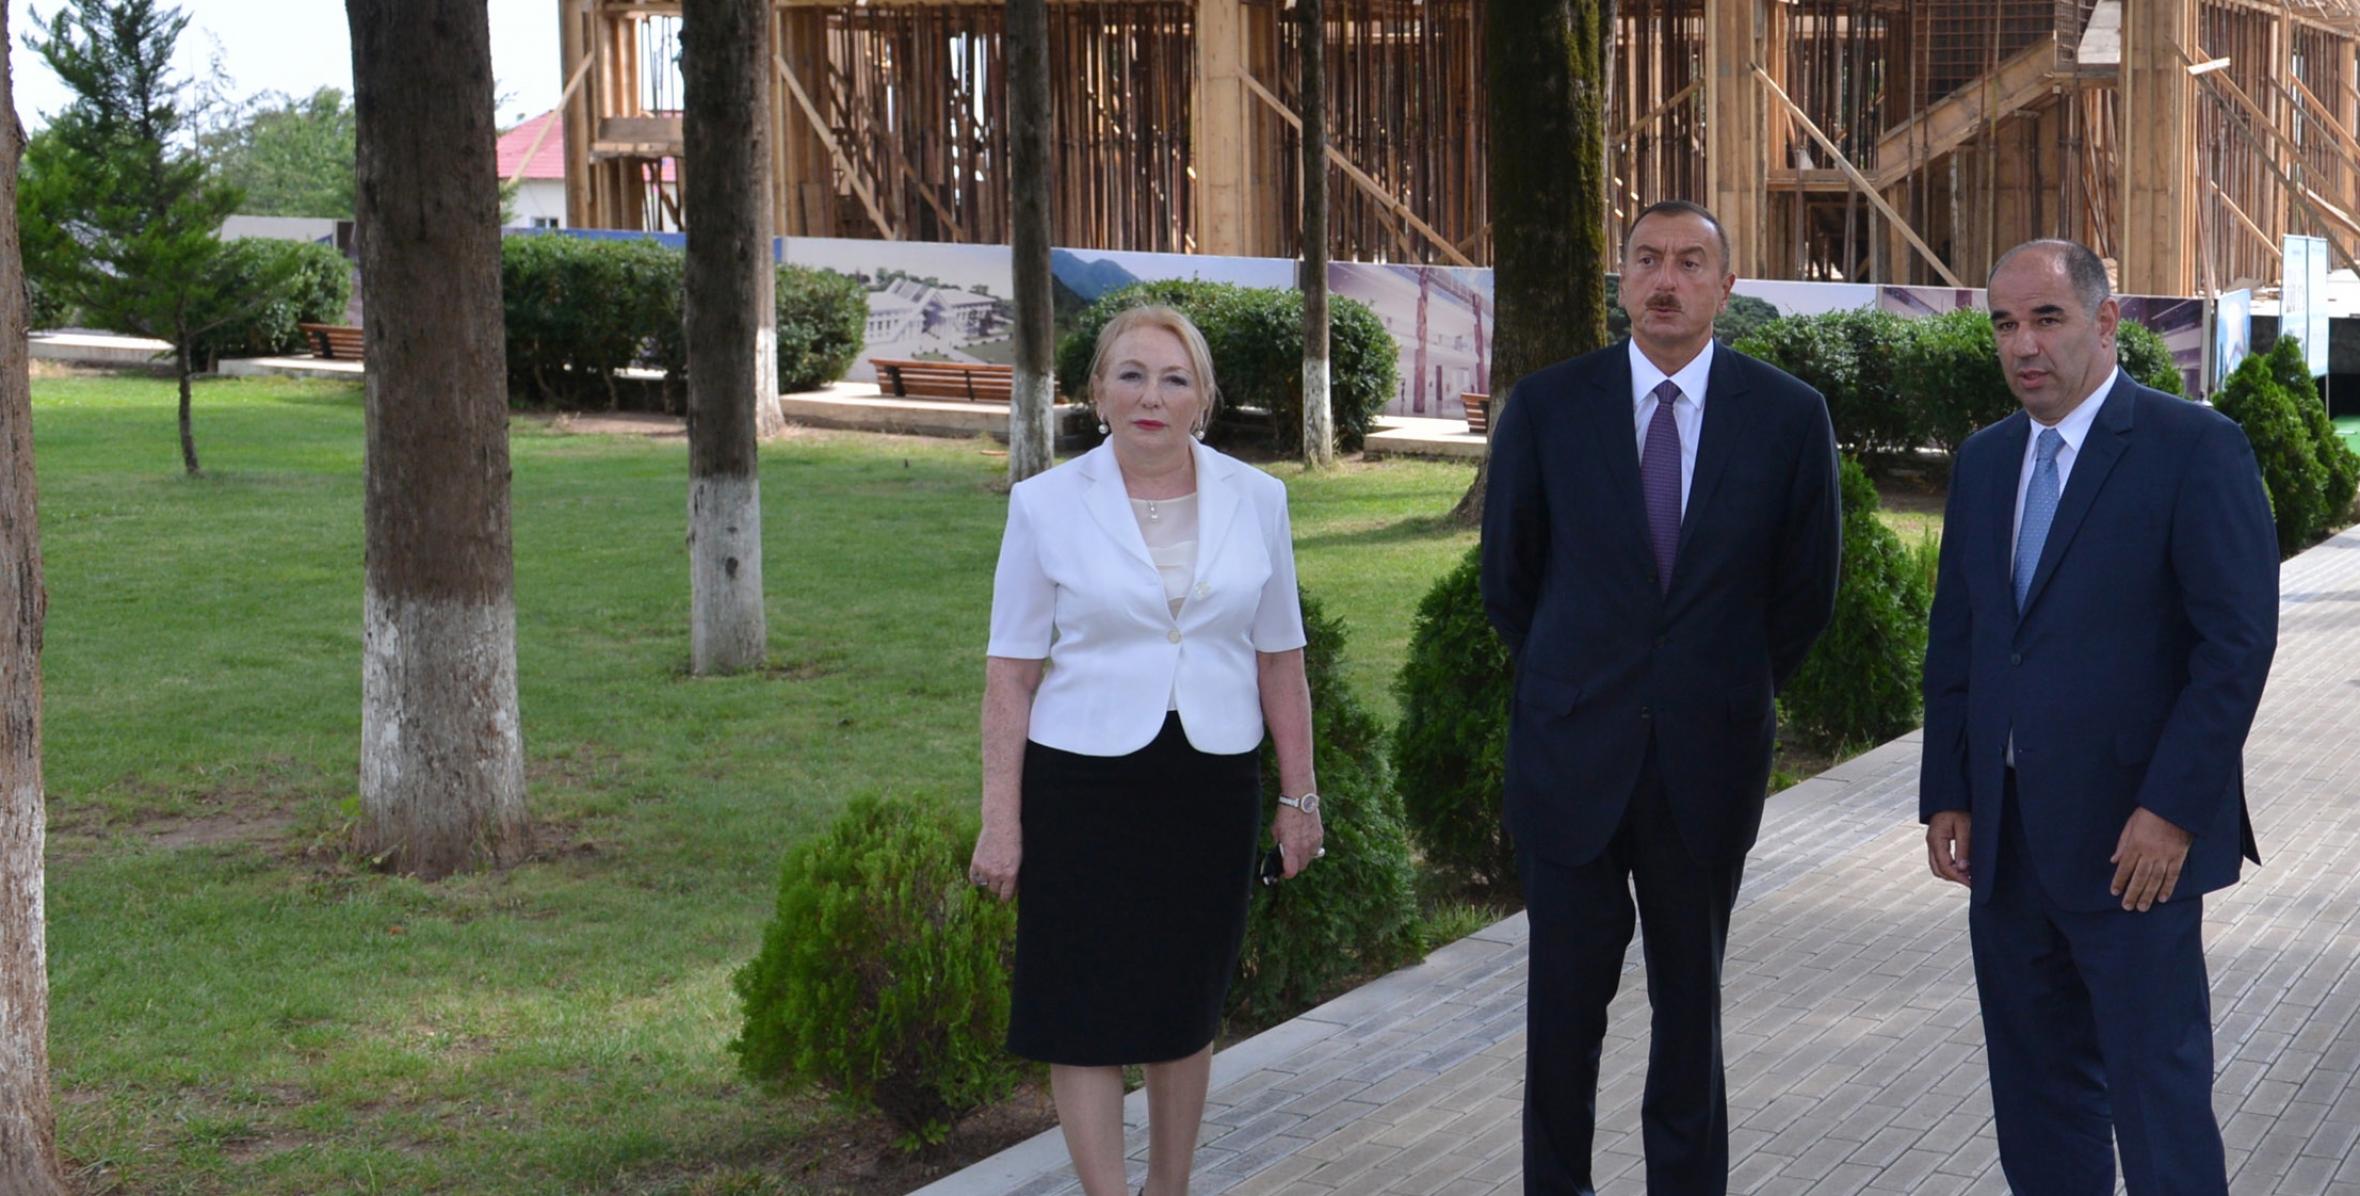 Ilham Aliyev reviewed progress of construction of the Heydar Aliyev Center in Oguz